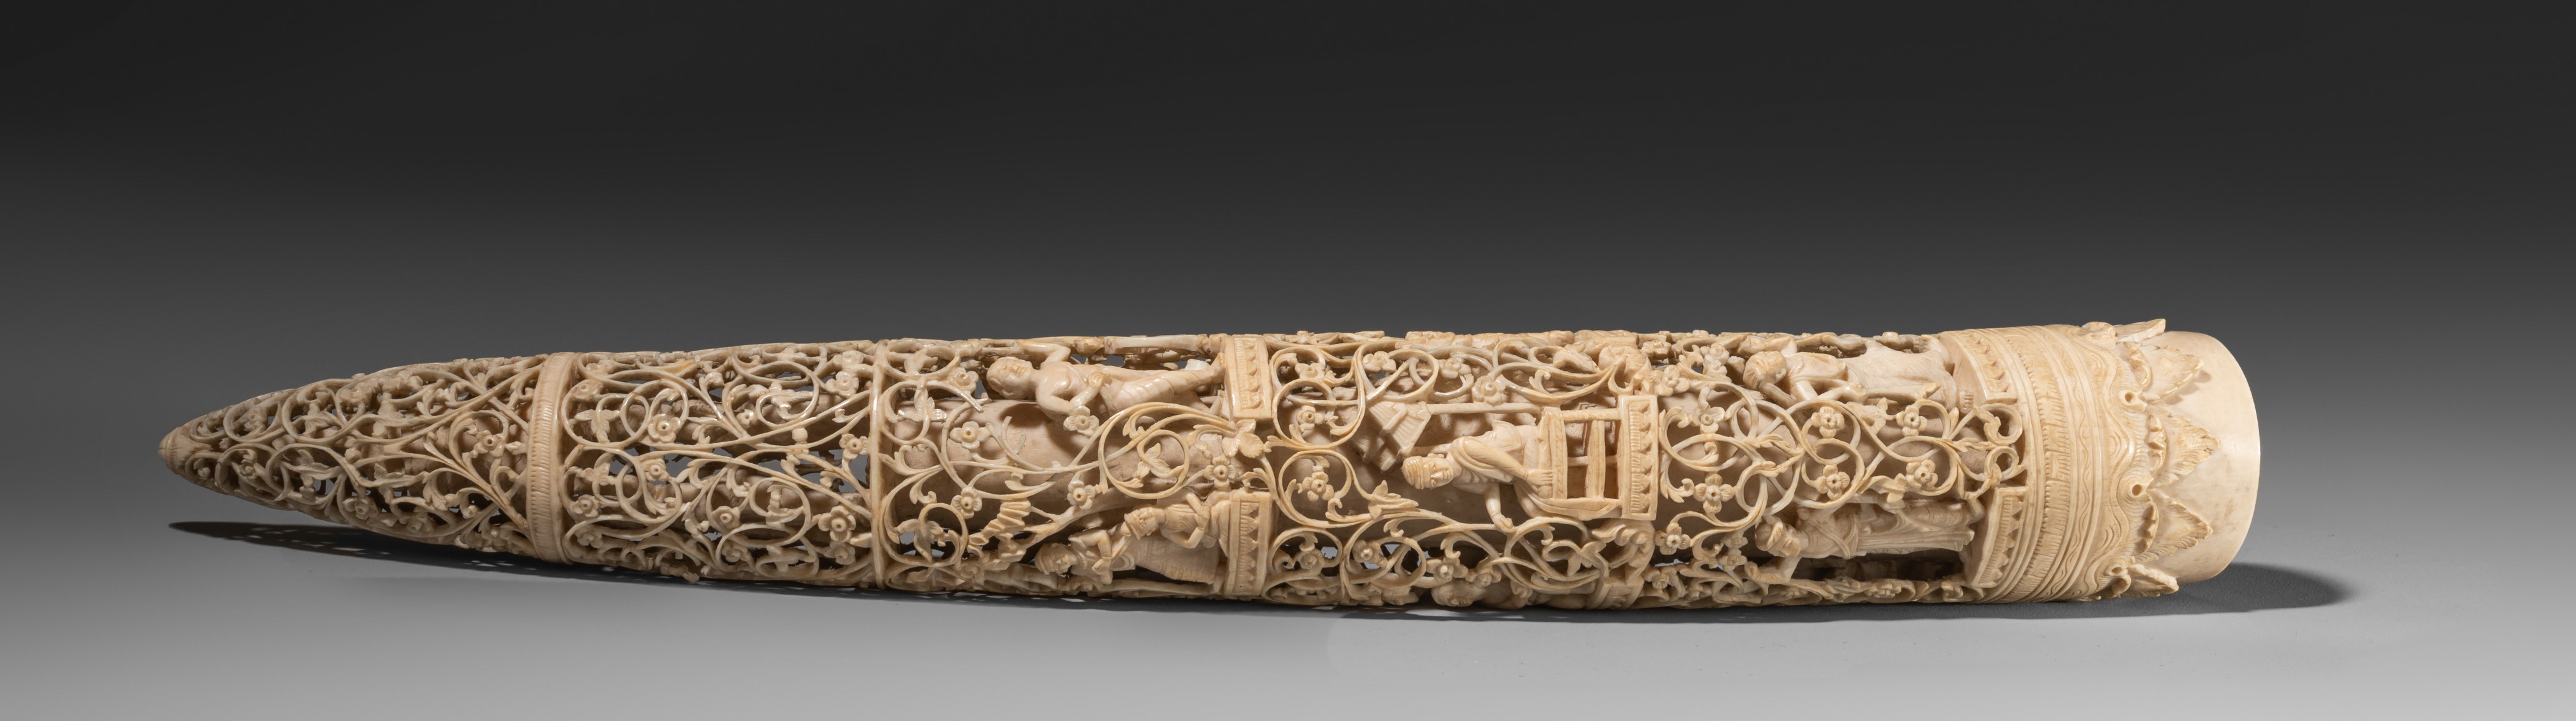 A Burmese sculpted ivory tusk, H 38,1 cm, 624 g, 19thC (+) - Image 2 of 9